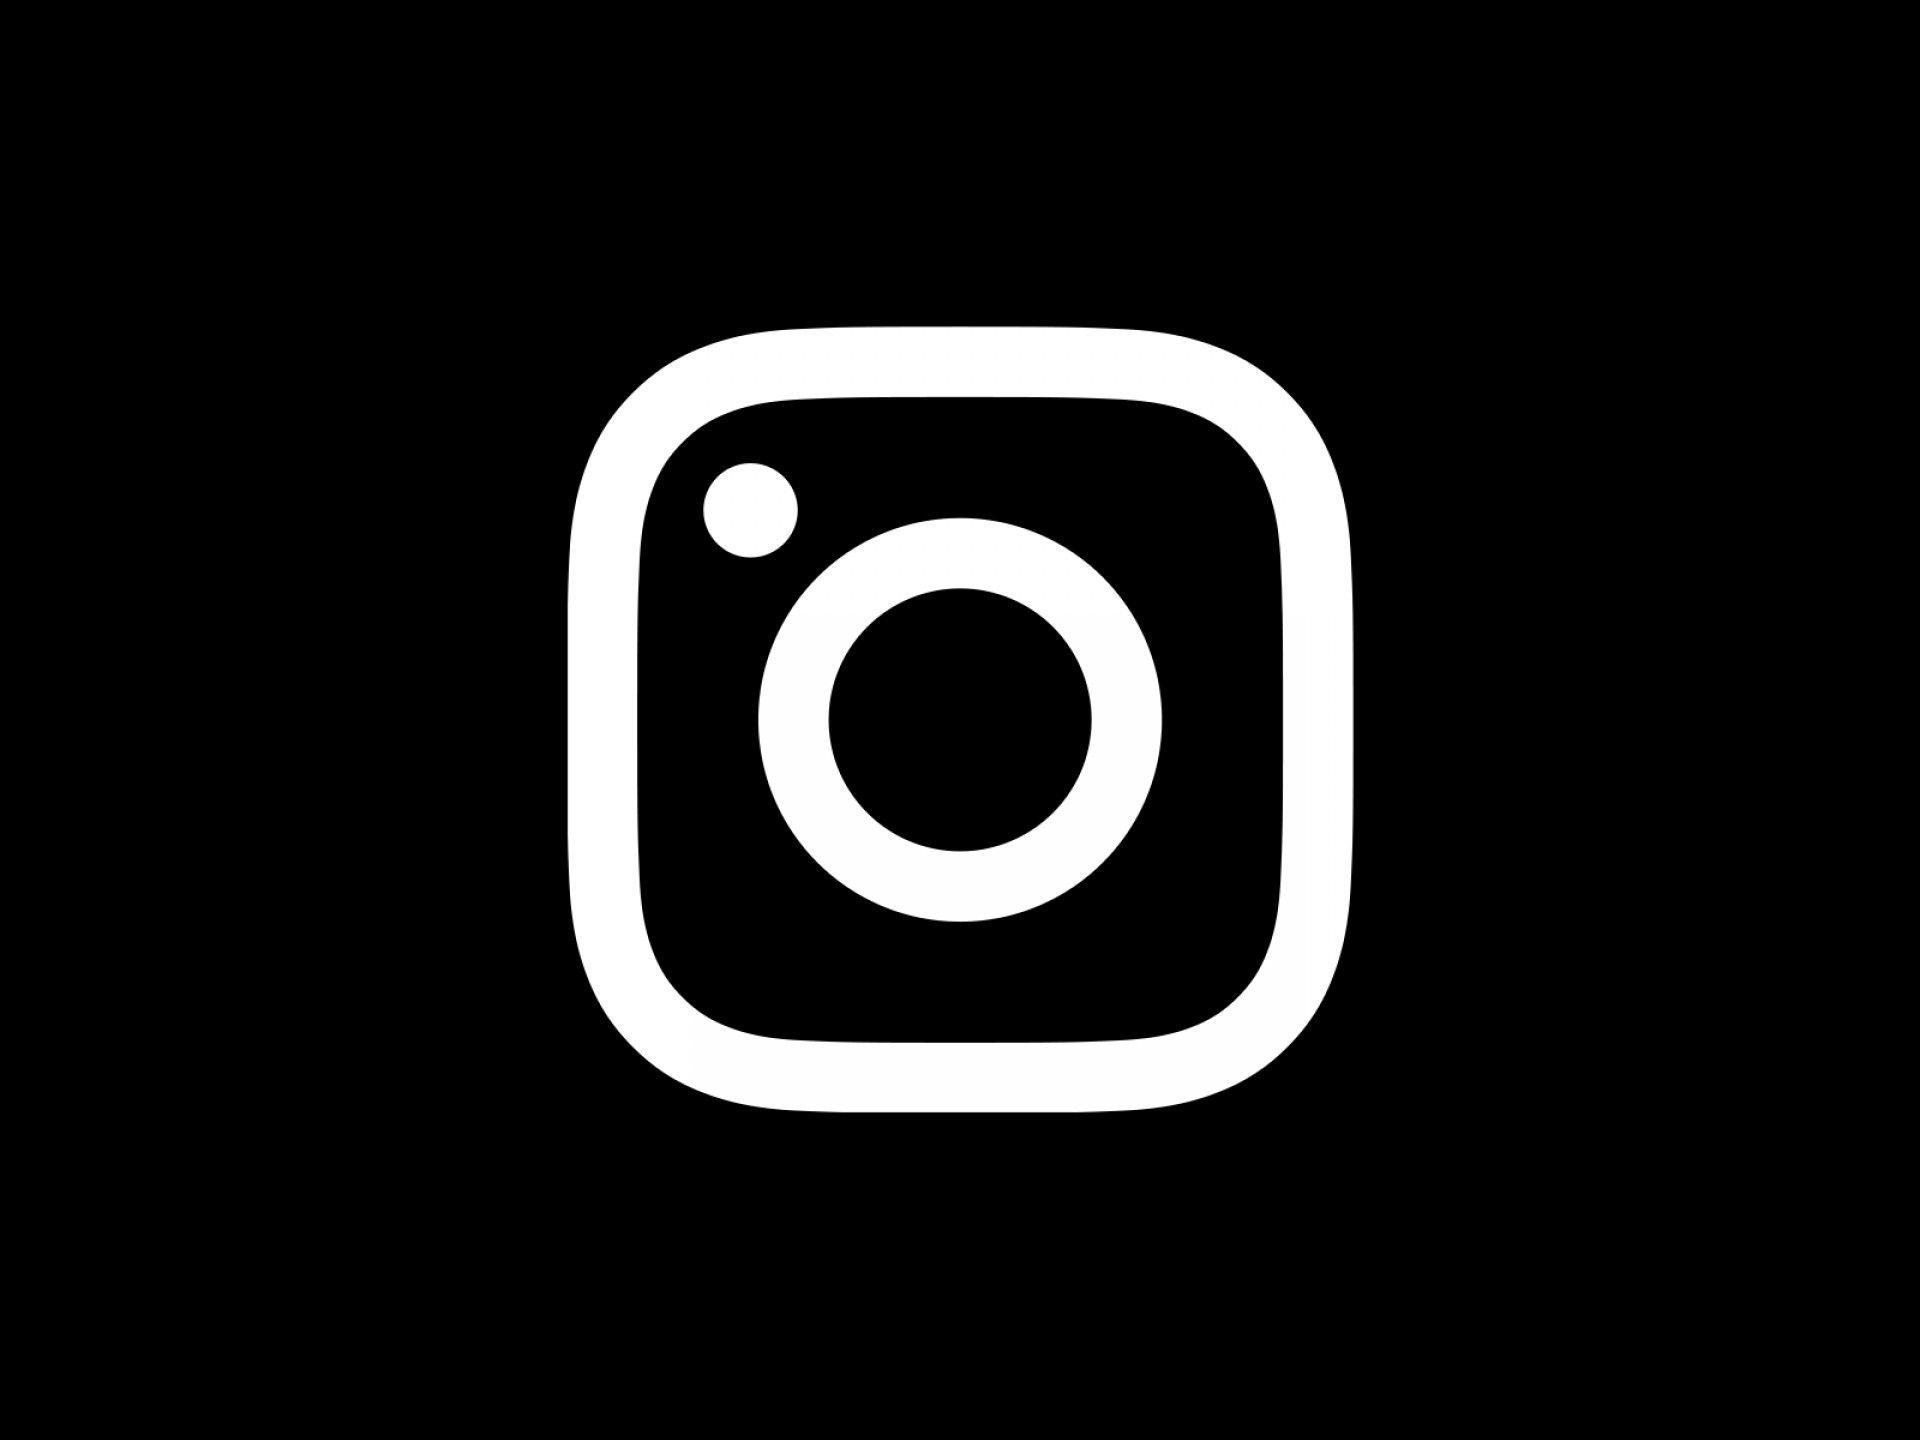 Instagram Logo Vector Icon Free Download. SOIDERGI. Instagram logo, New instagram logo, Twitter logo